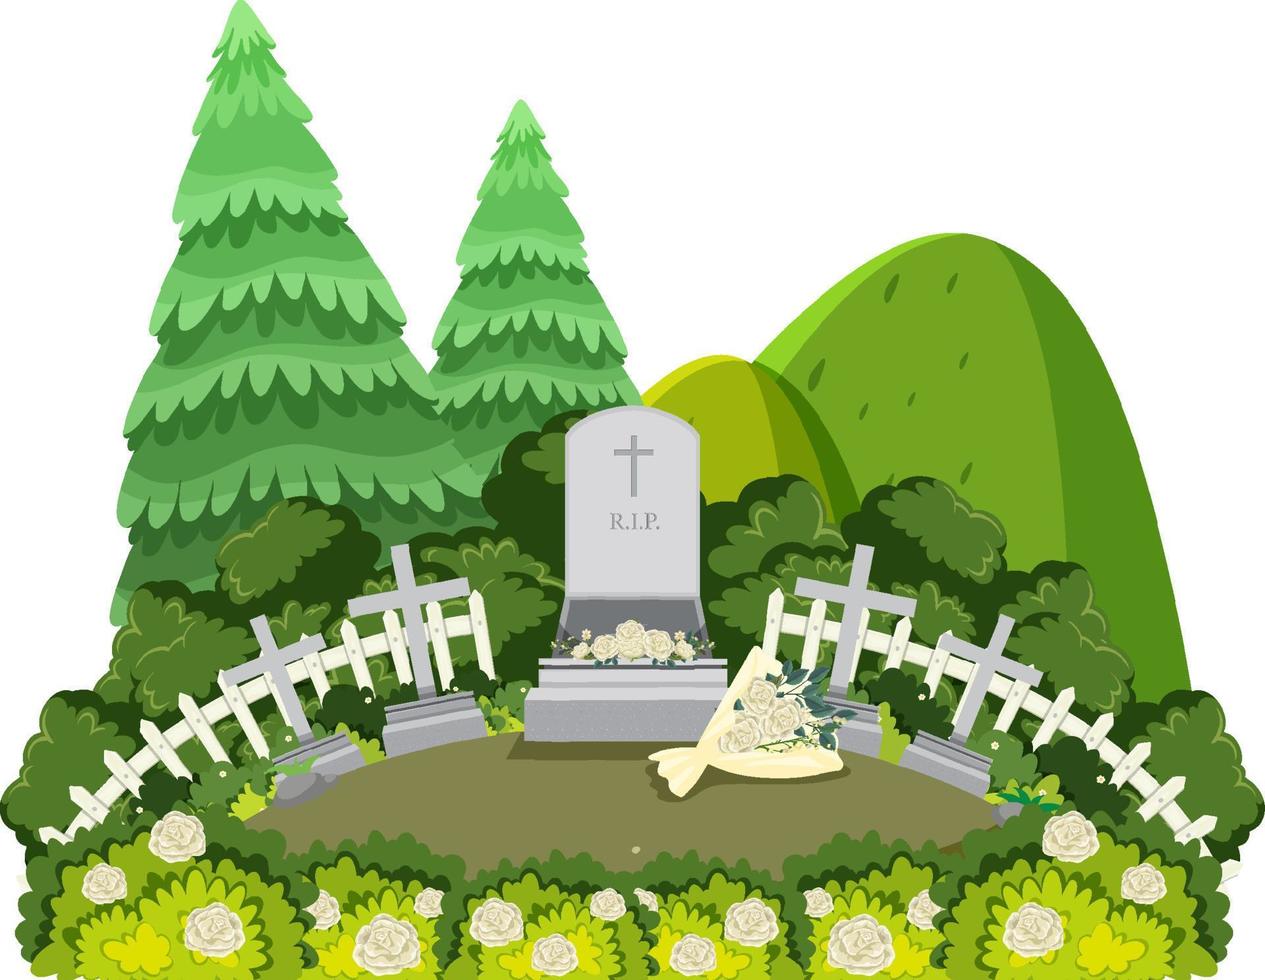 Cemetery graveyard scene isolated vector